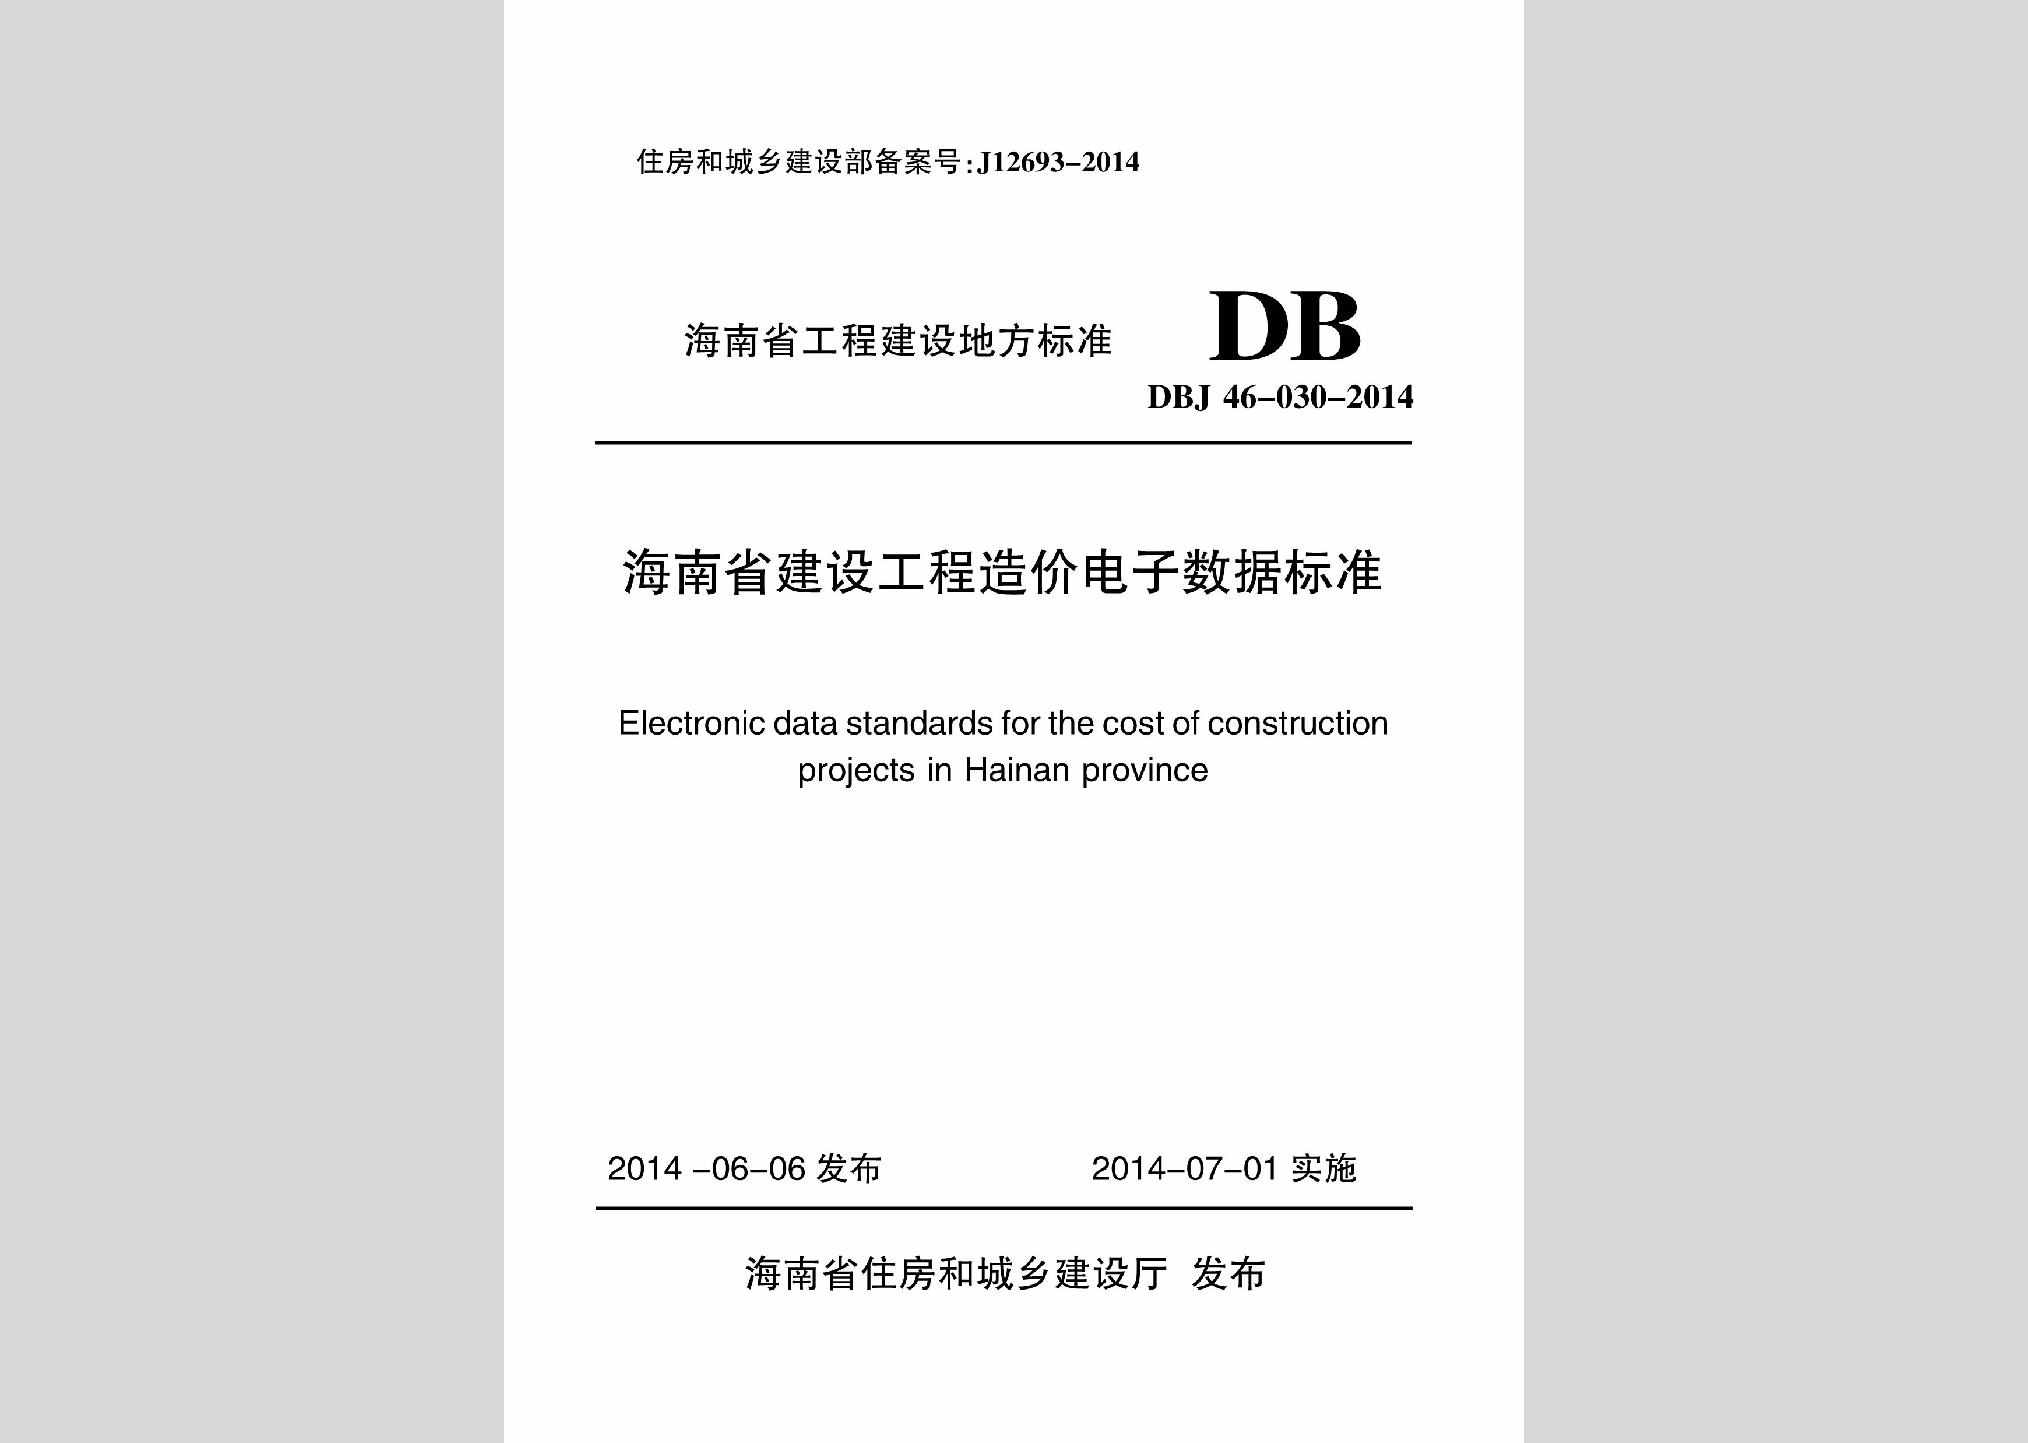 DBJ46-030-2014：海南省建设工程造价电子数据标准